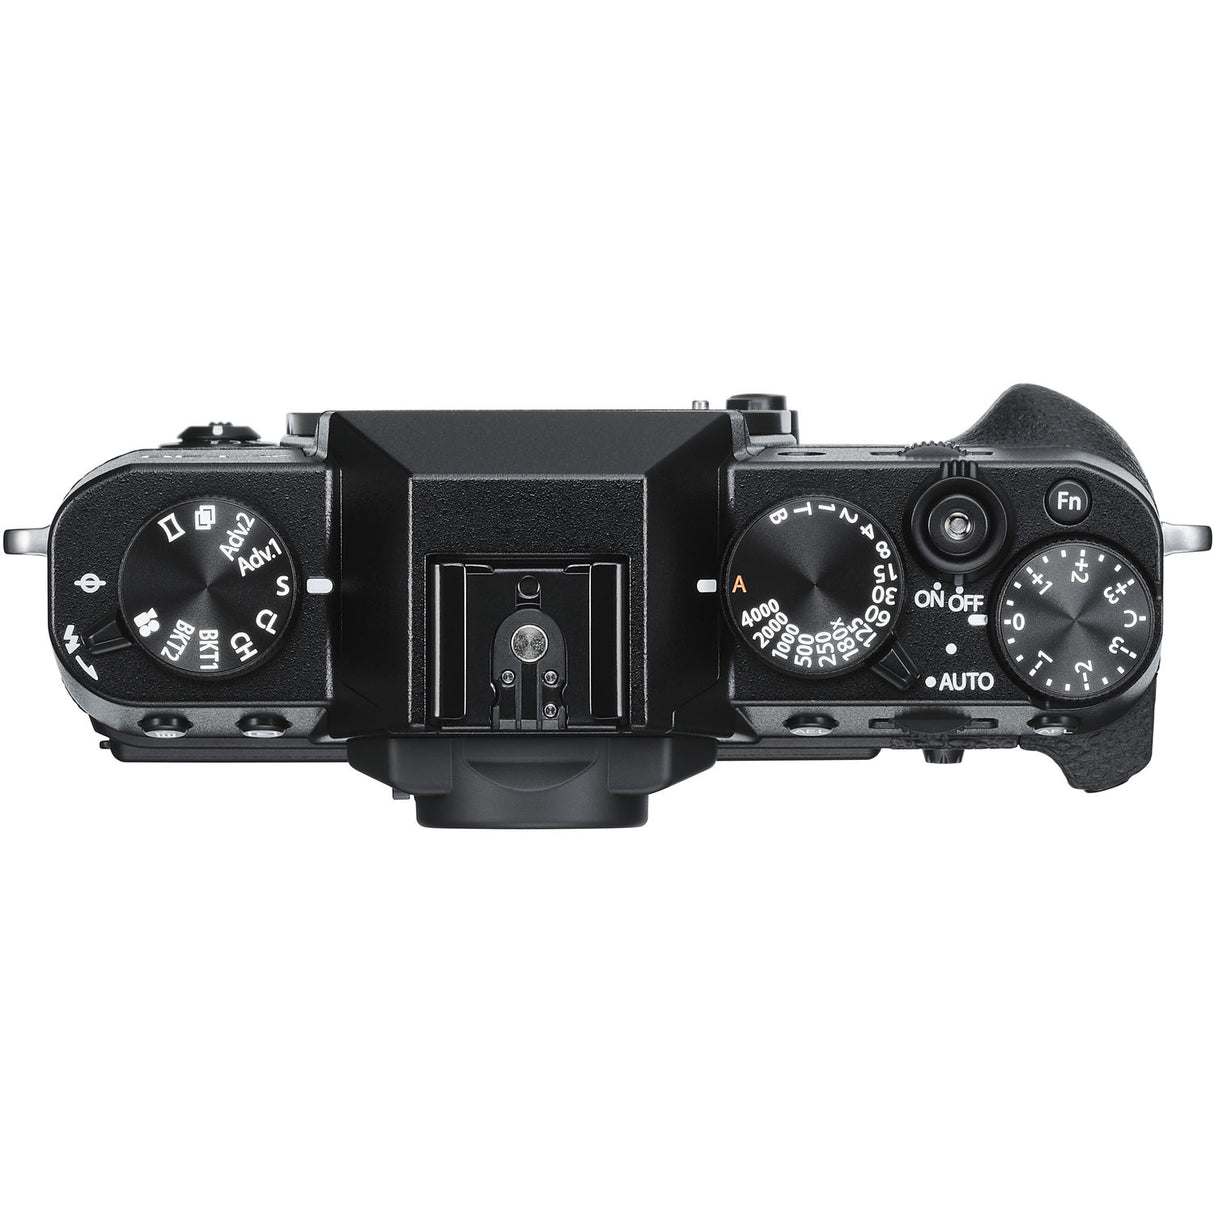 FUJIFILM X-T30 Mirrorless Digital Camera (Body Only) Black